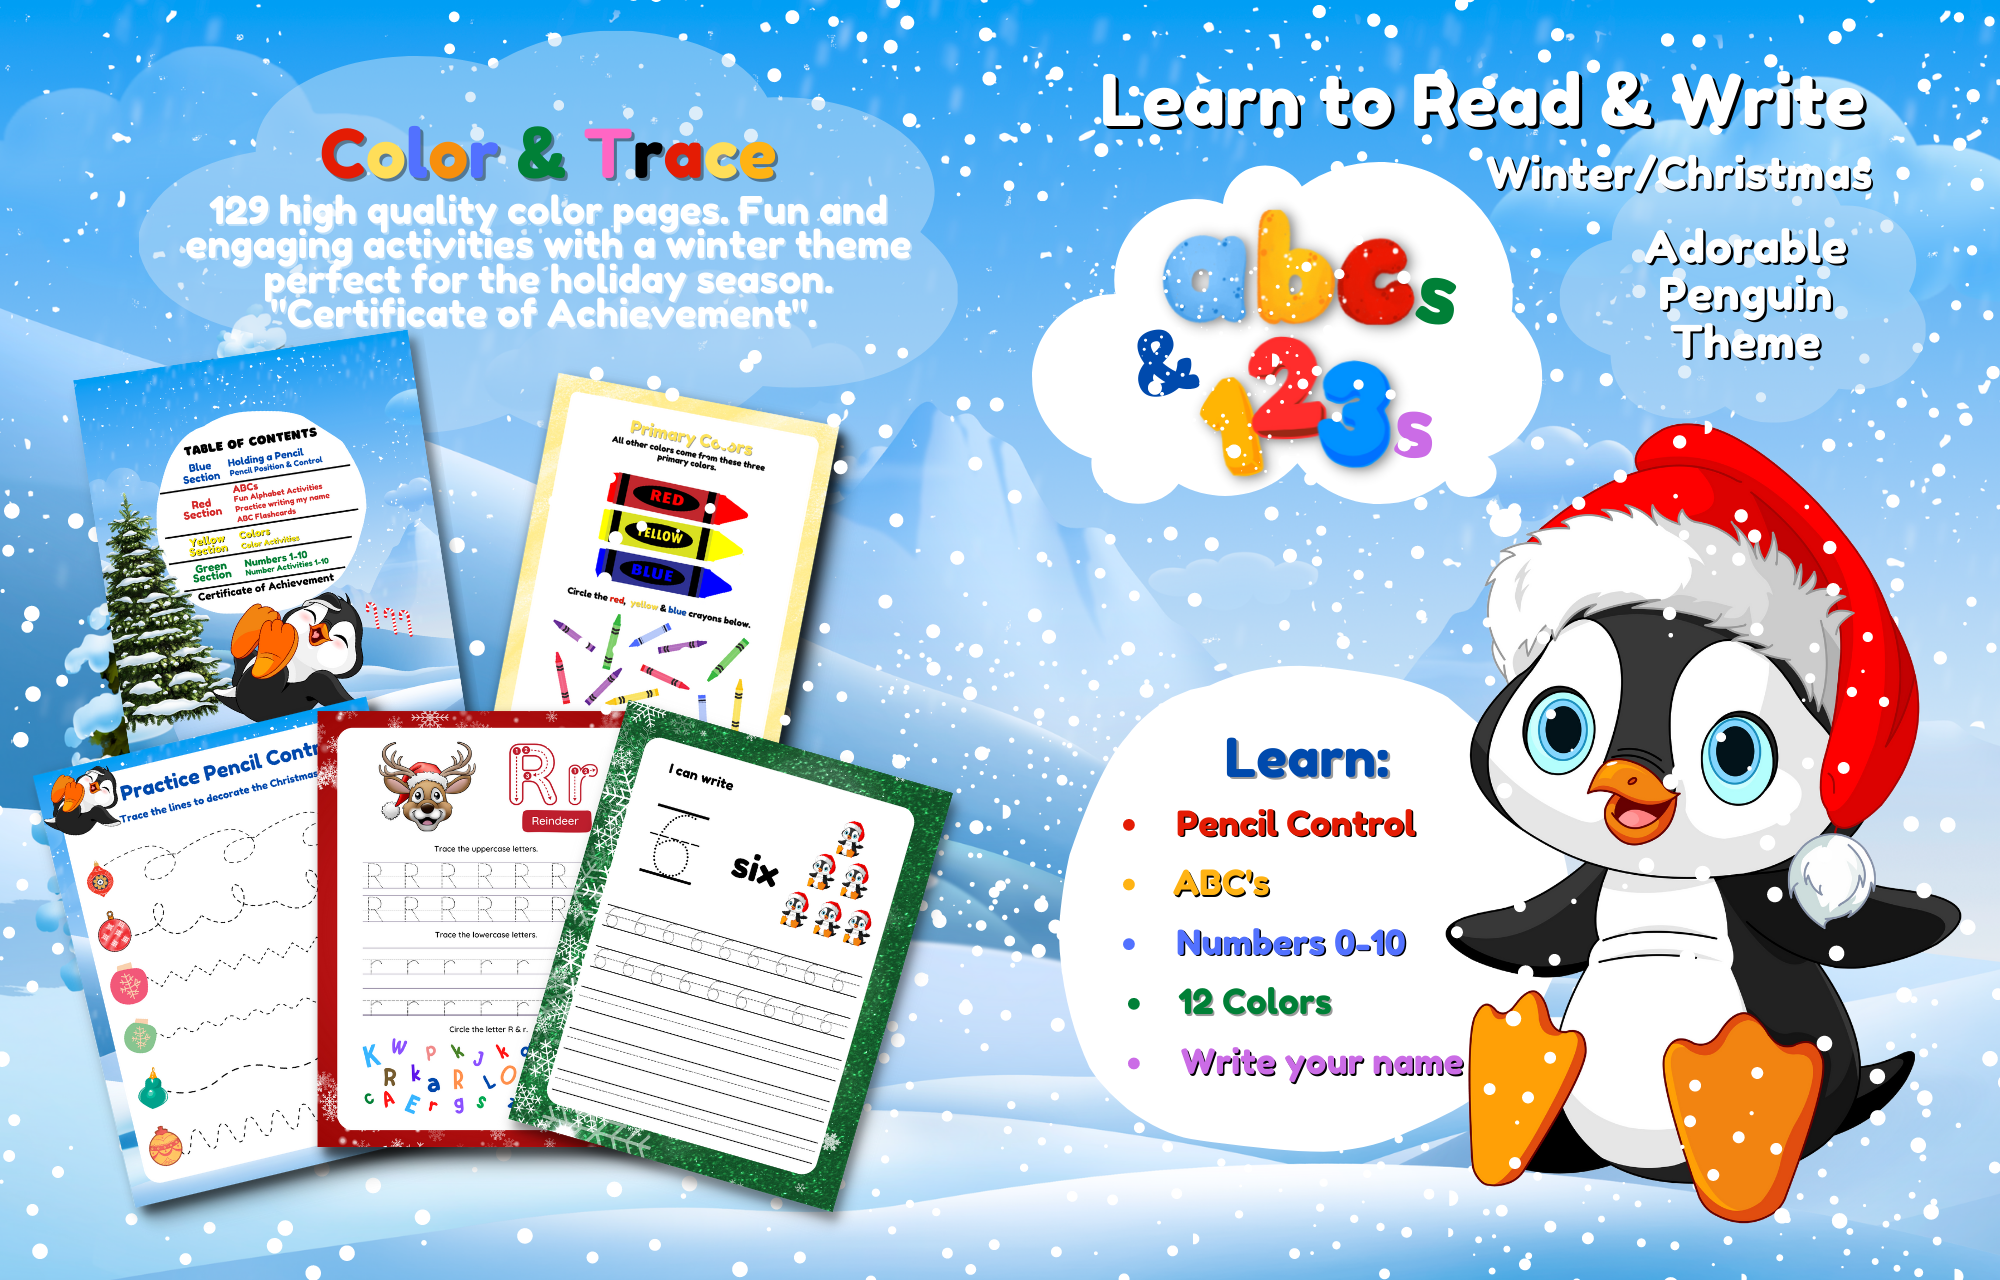 Learn ABCs&. 123s -Winter